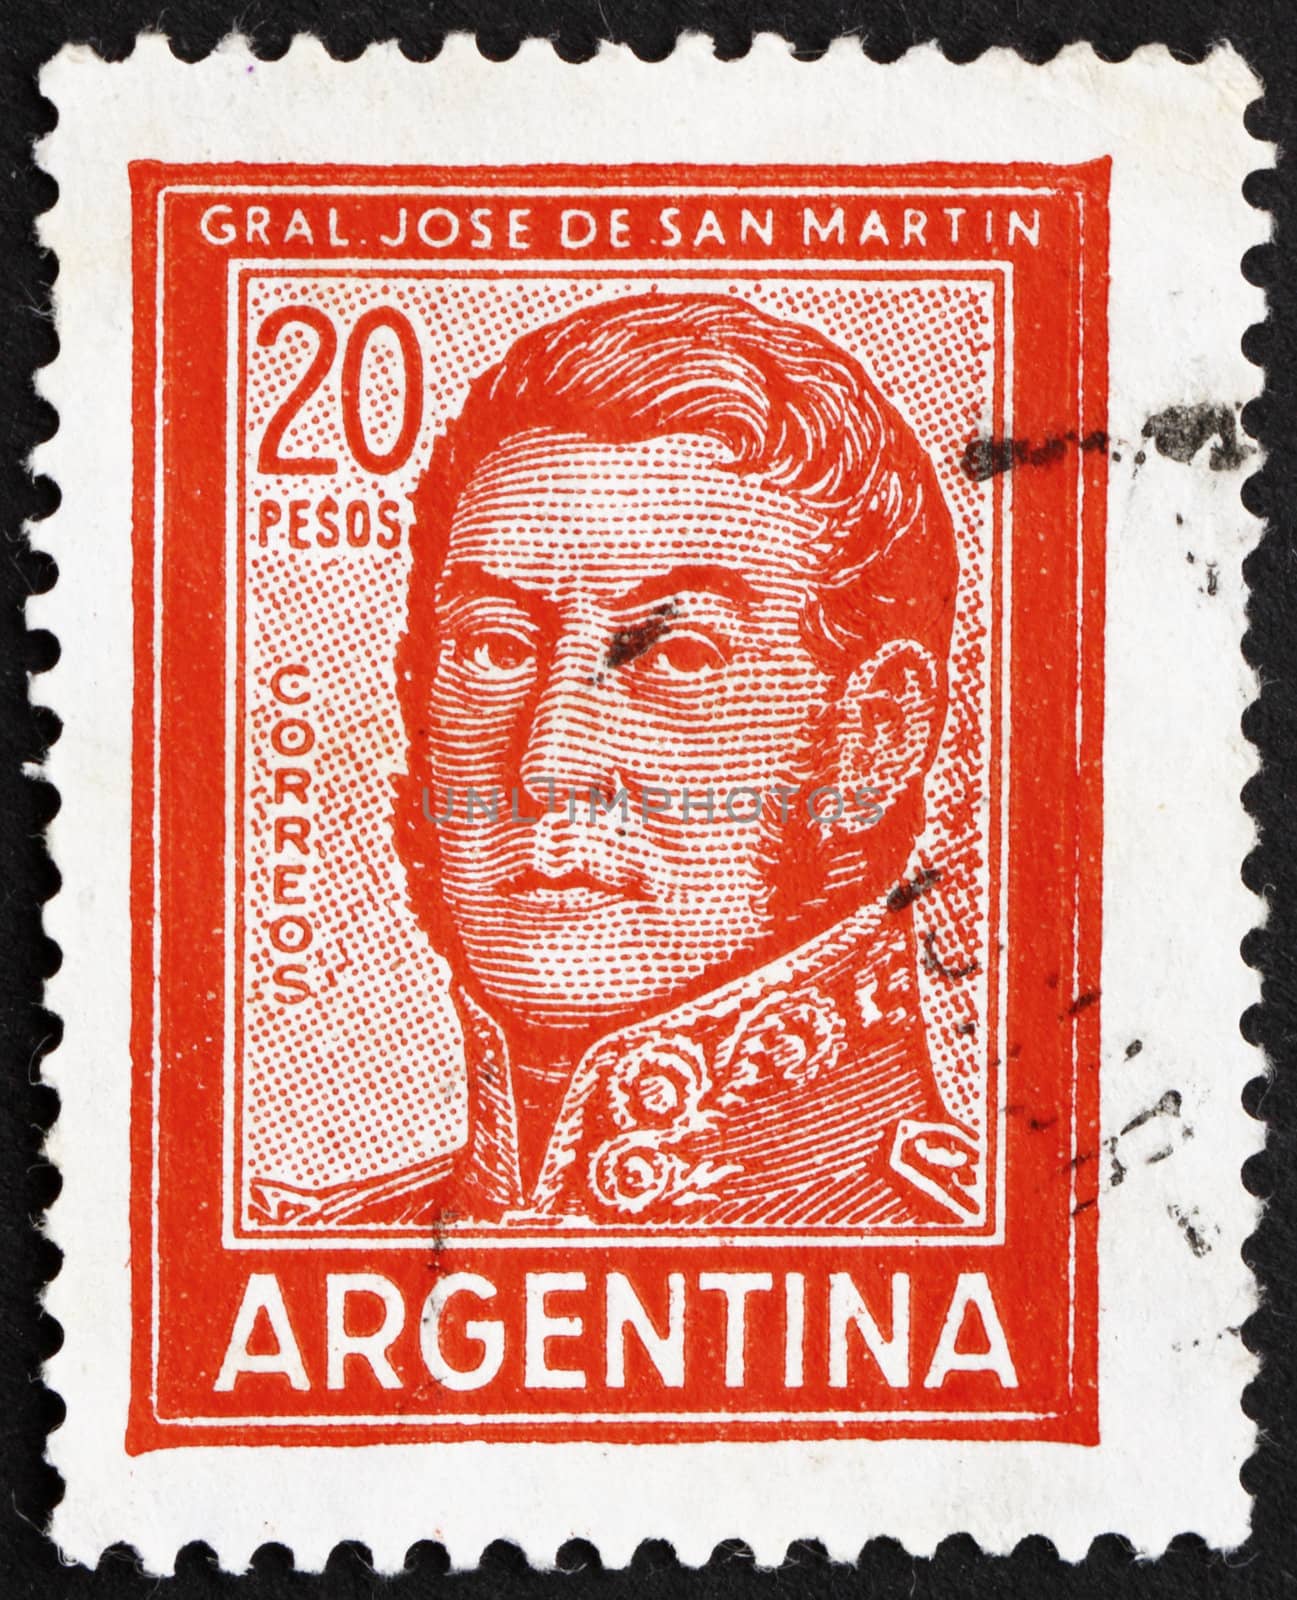 ARGENTINA - CIRCA 1967: a stamp printed in the Argentina shows Jose de San Martin, General, circa 1967